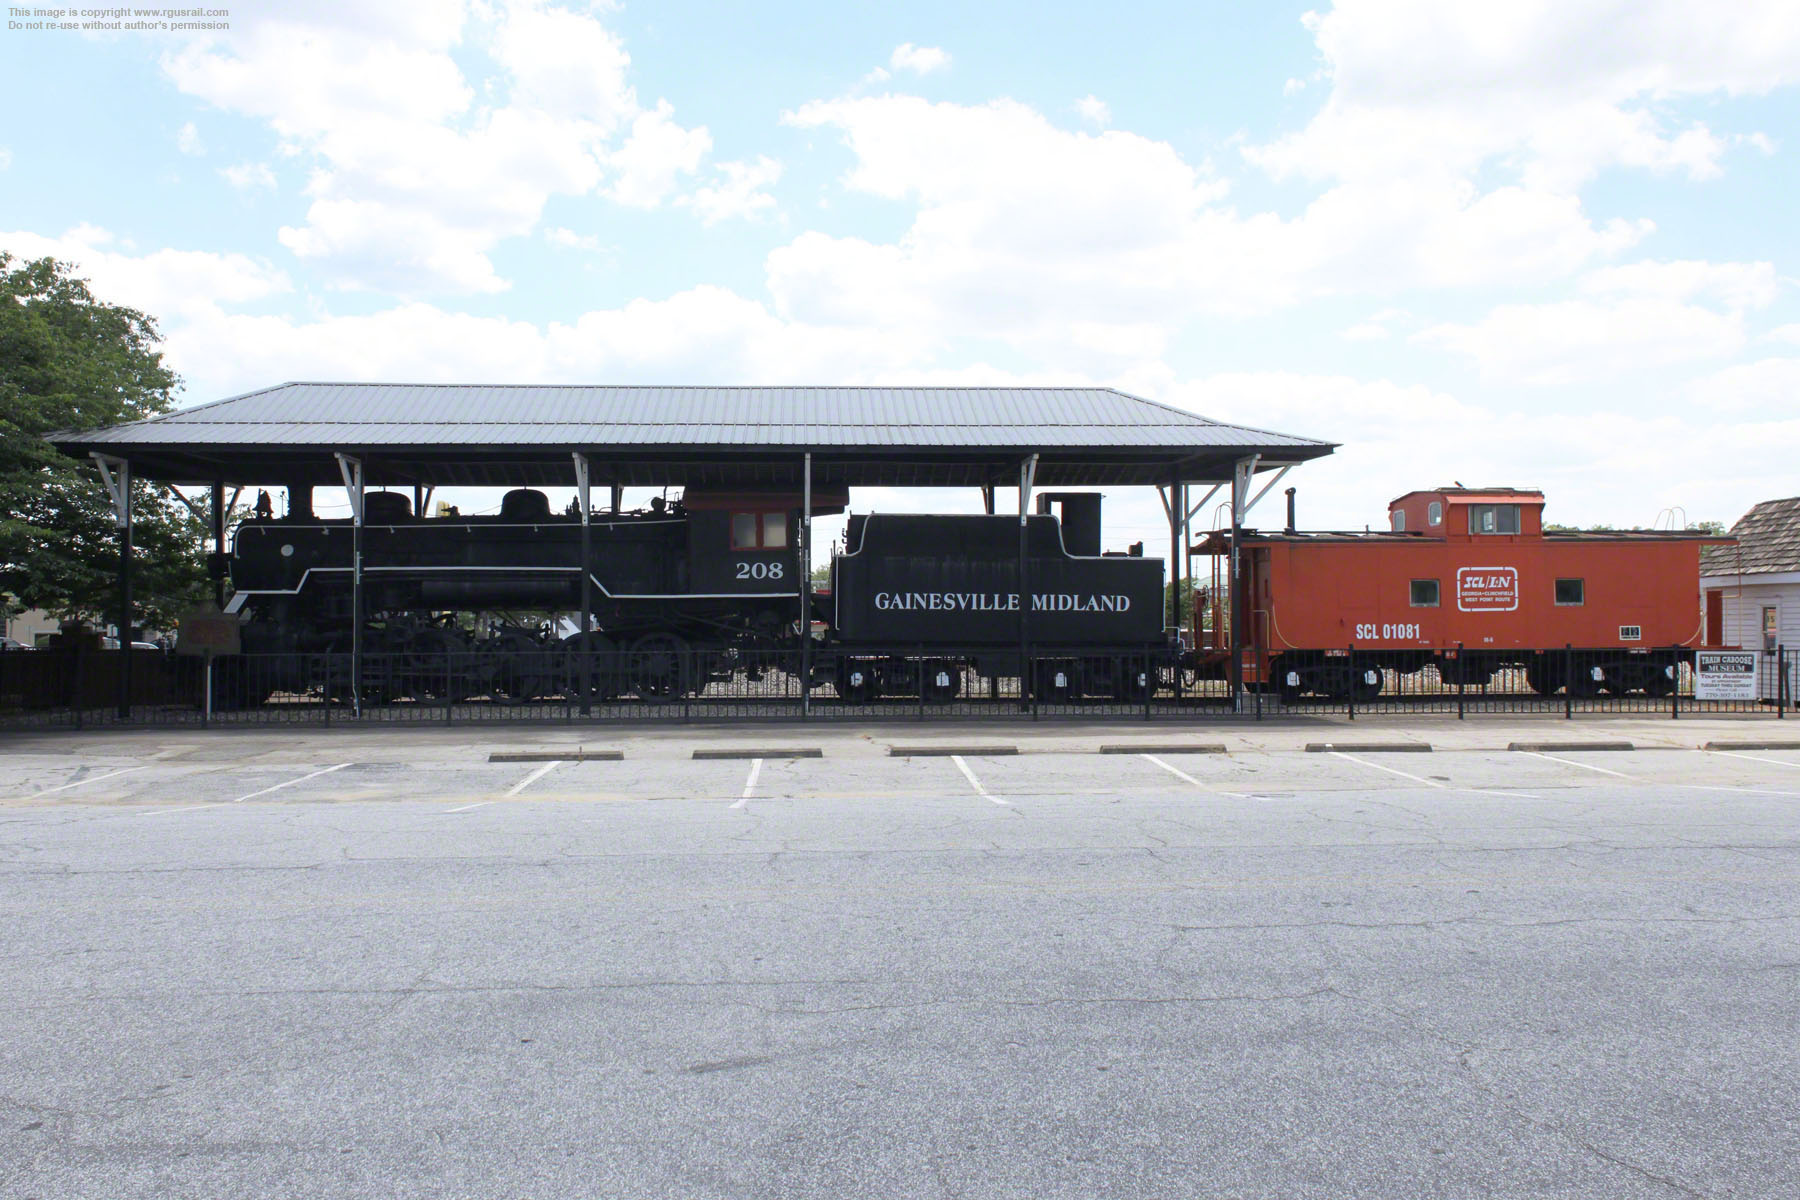 Locomotora de vapor Gainesville Midland 2-10-0 #208